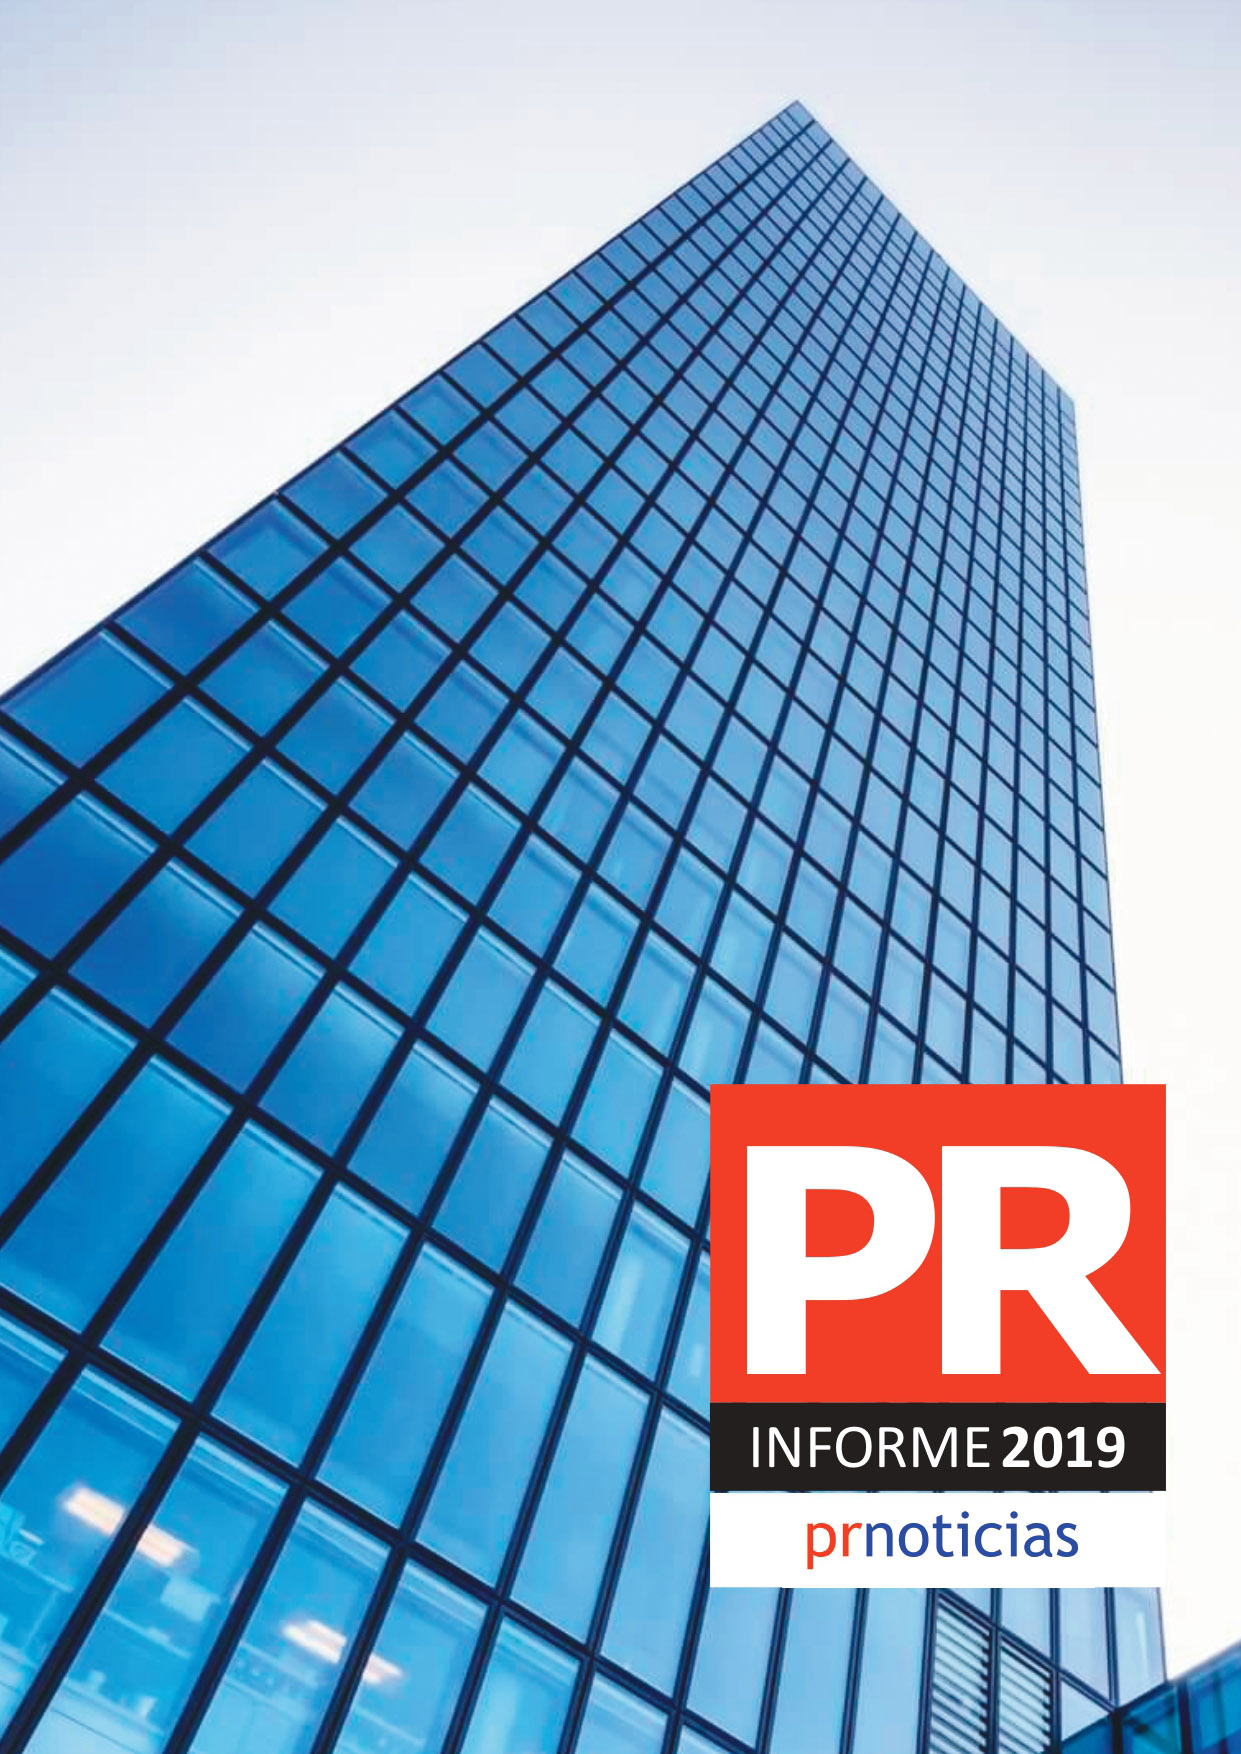 informe_pr_2019_ranking_facturacion_agencias_comunicacion_page-0001.jpg